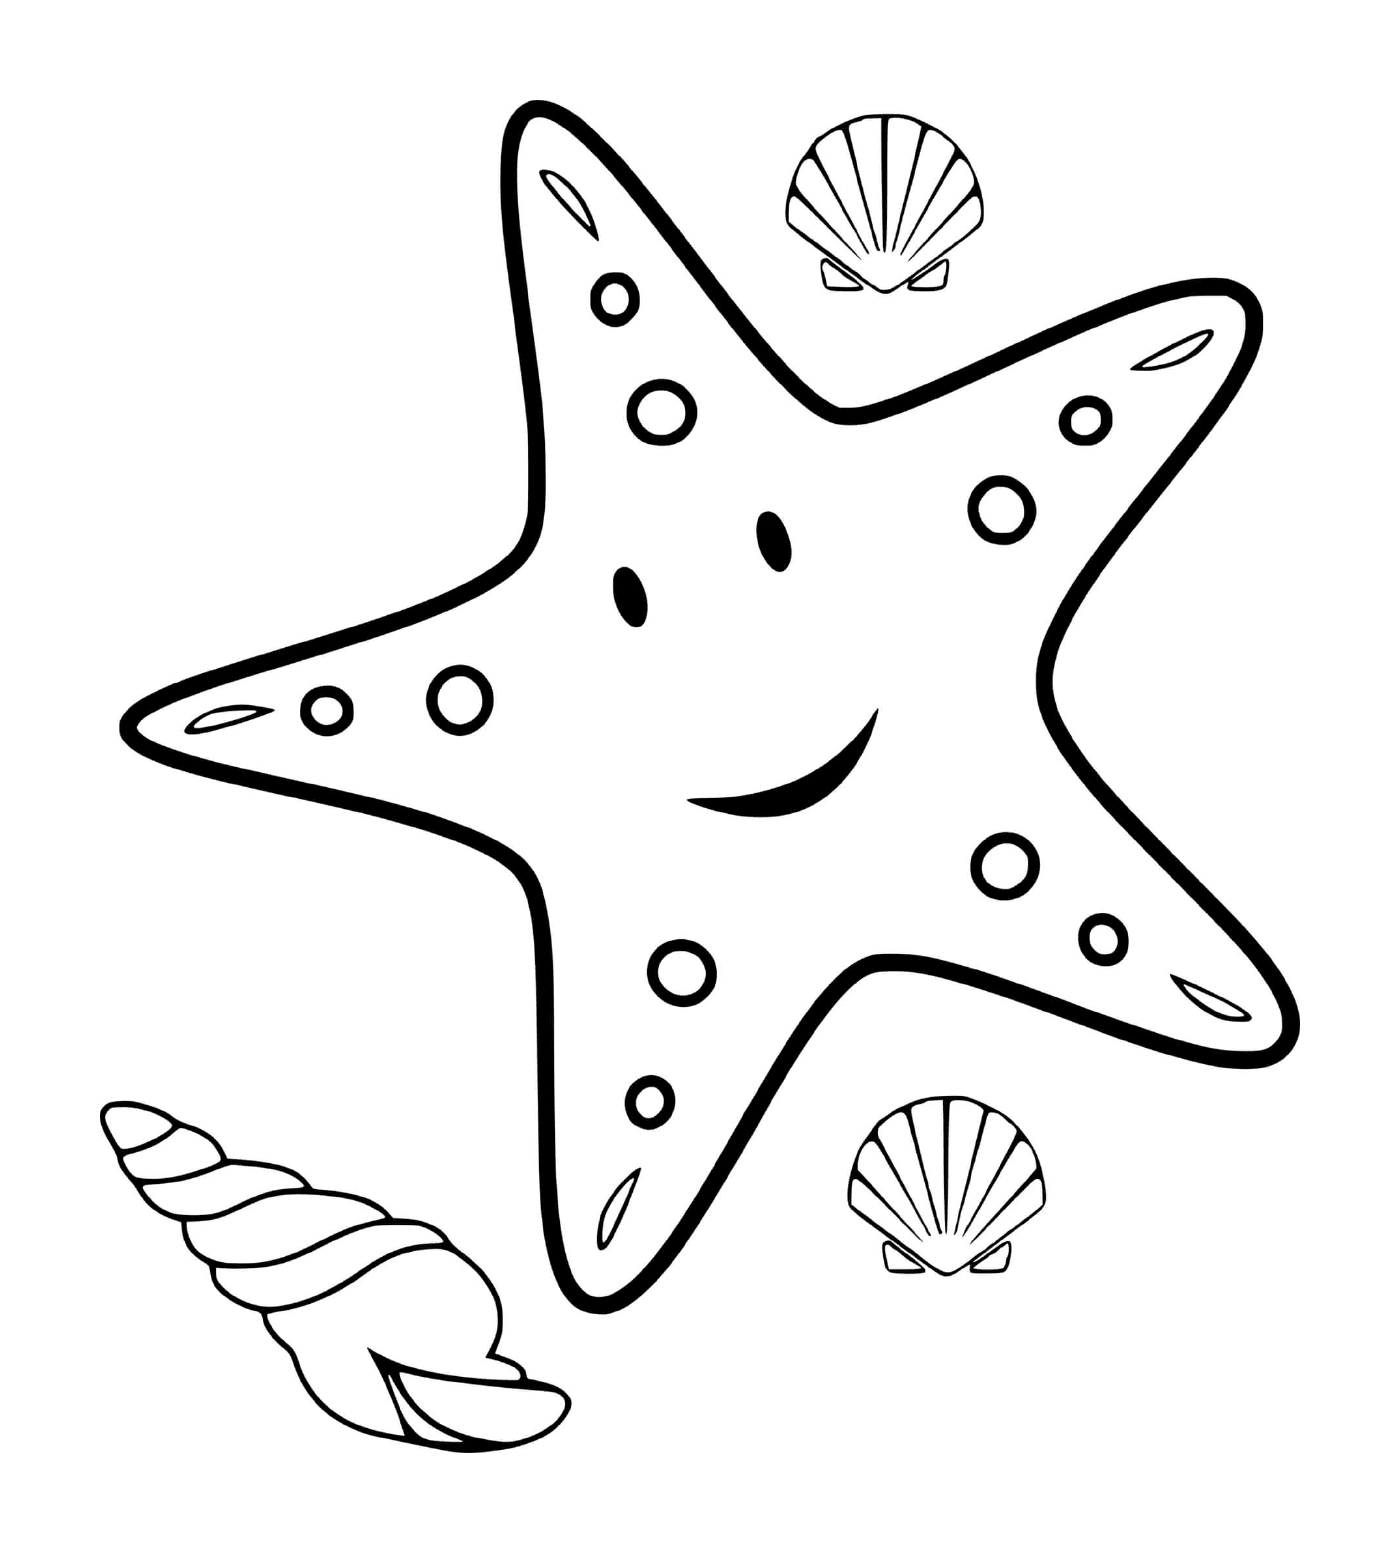  Окрашенная морская звезда 